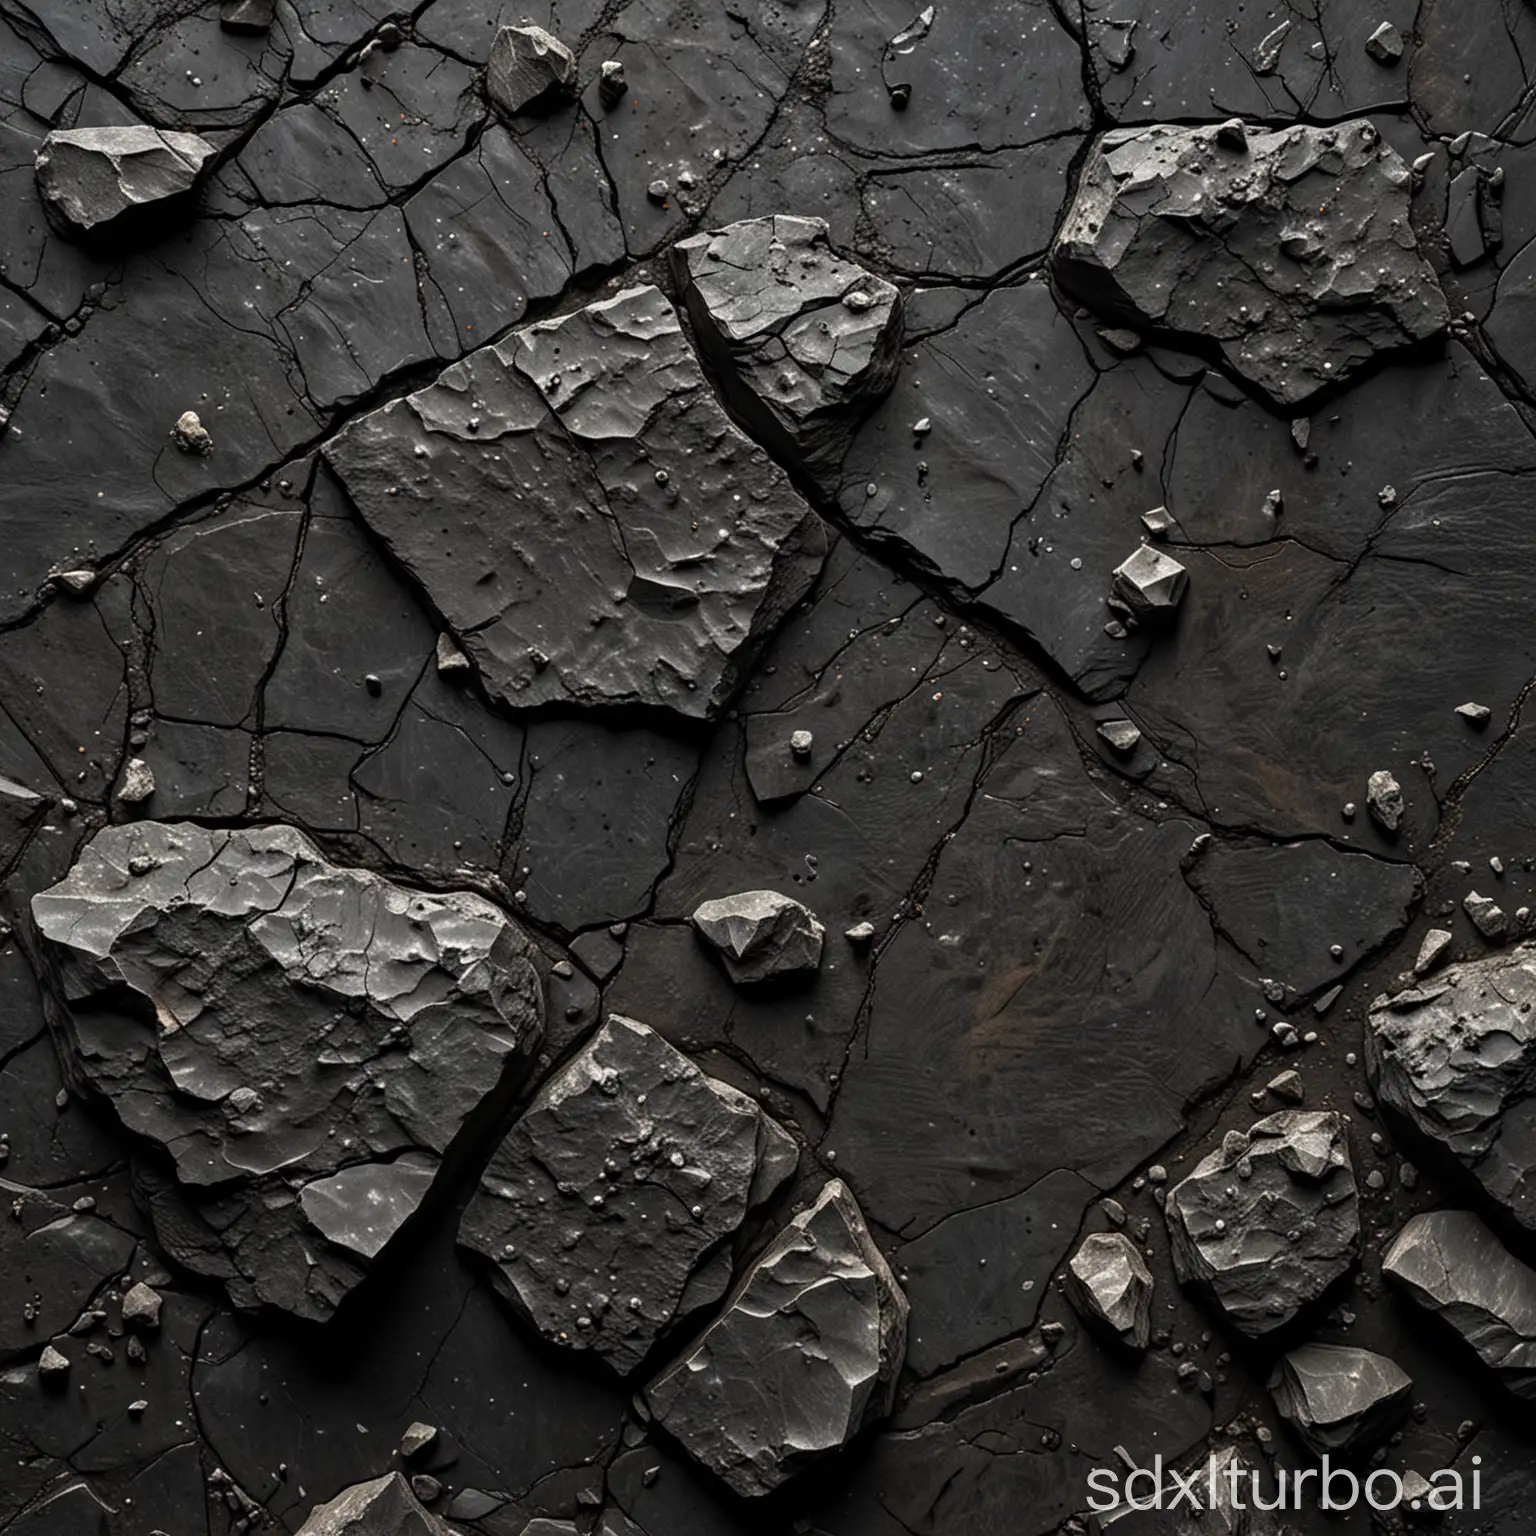 a dark cracked rocky surface asteroiden texture, high details